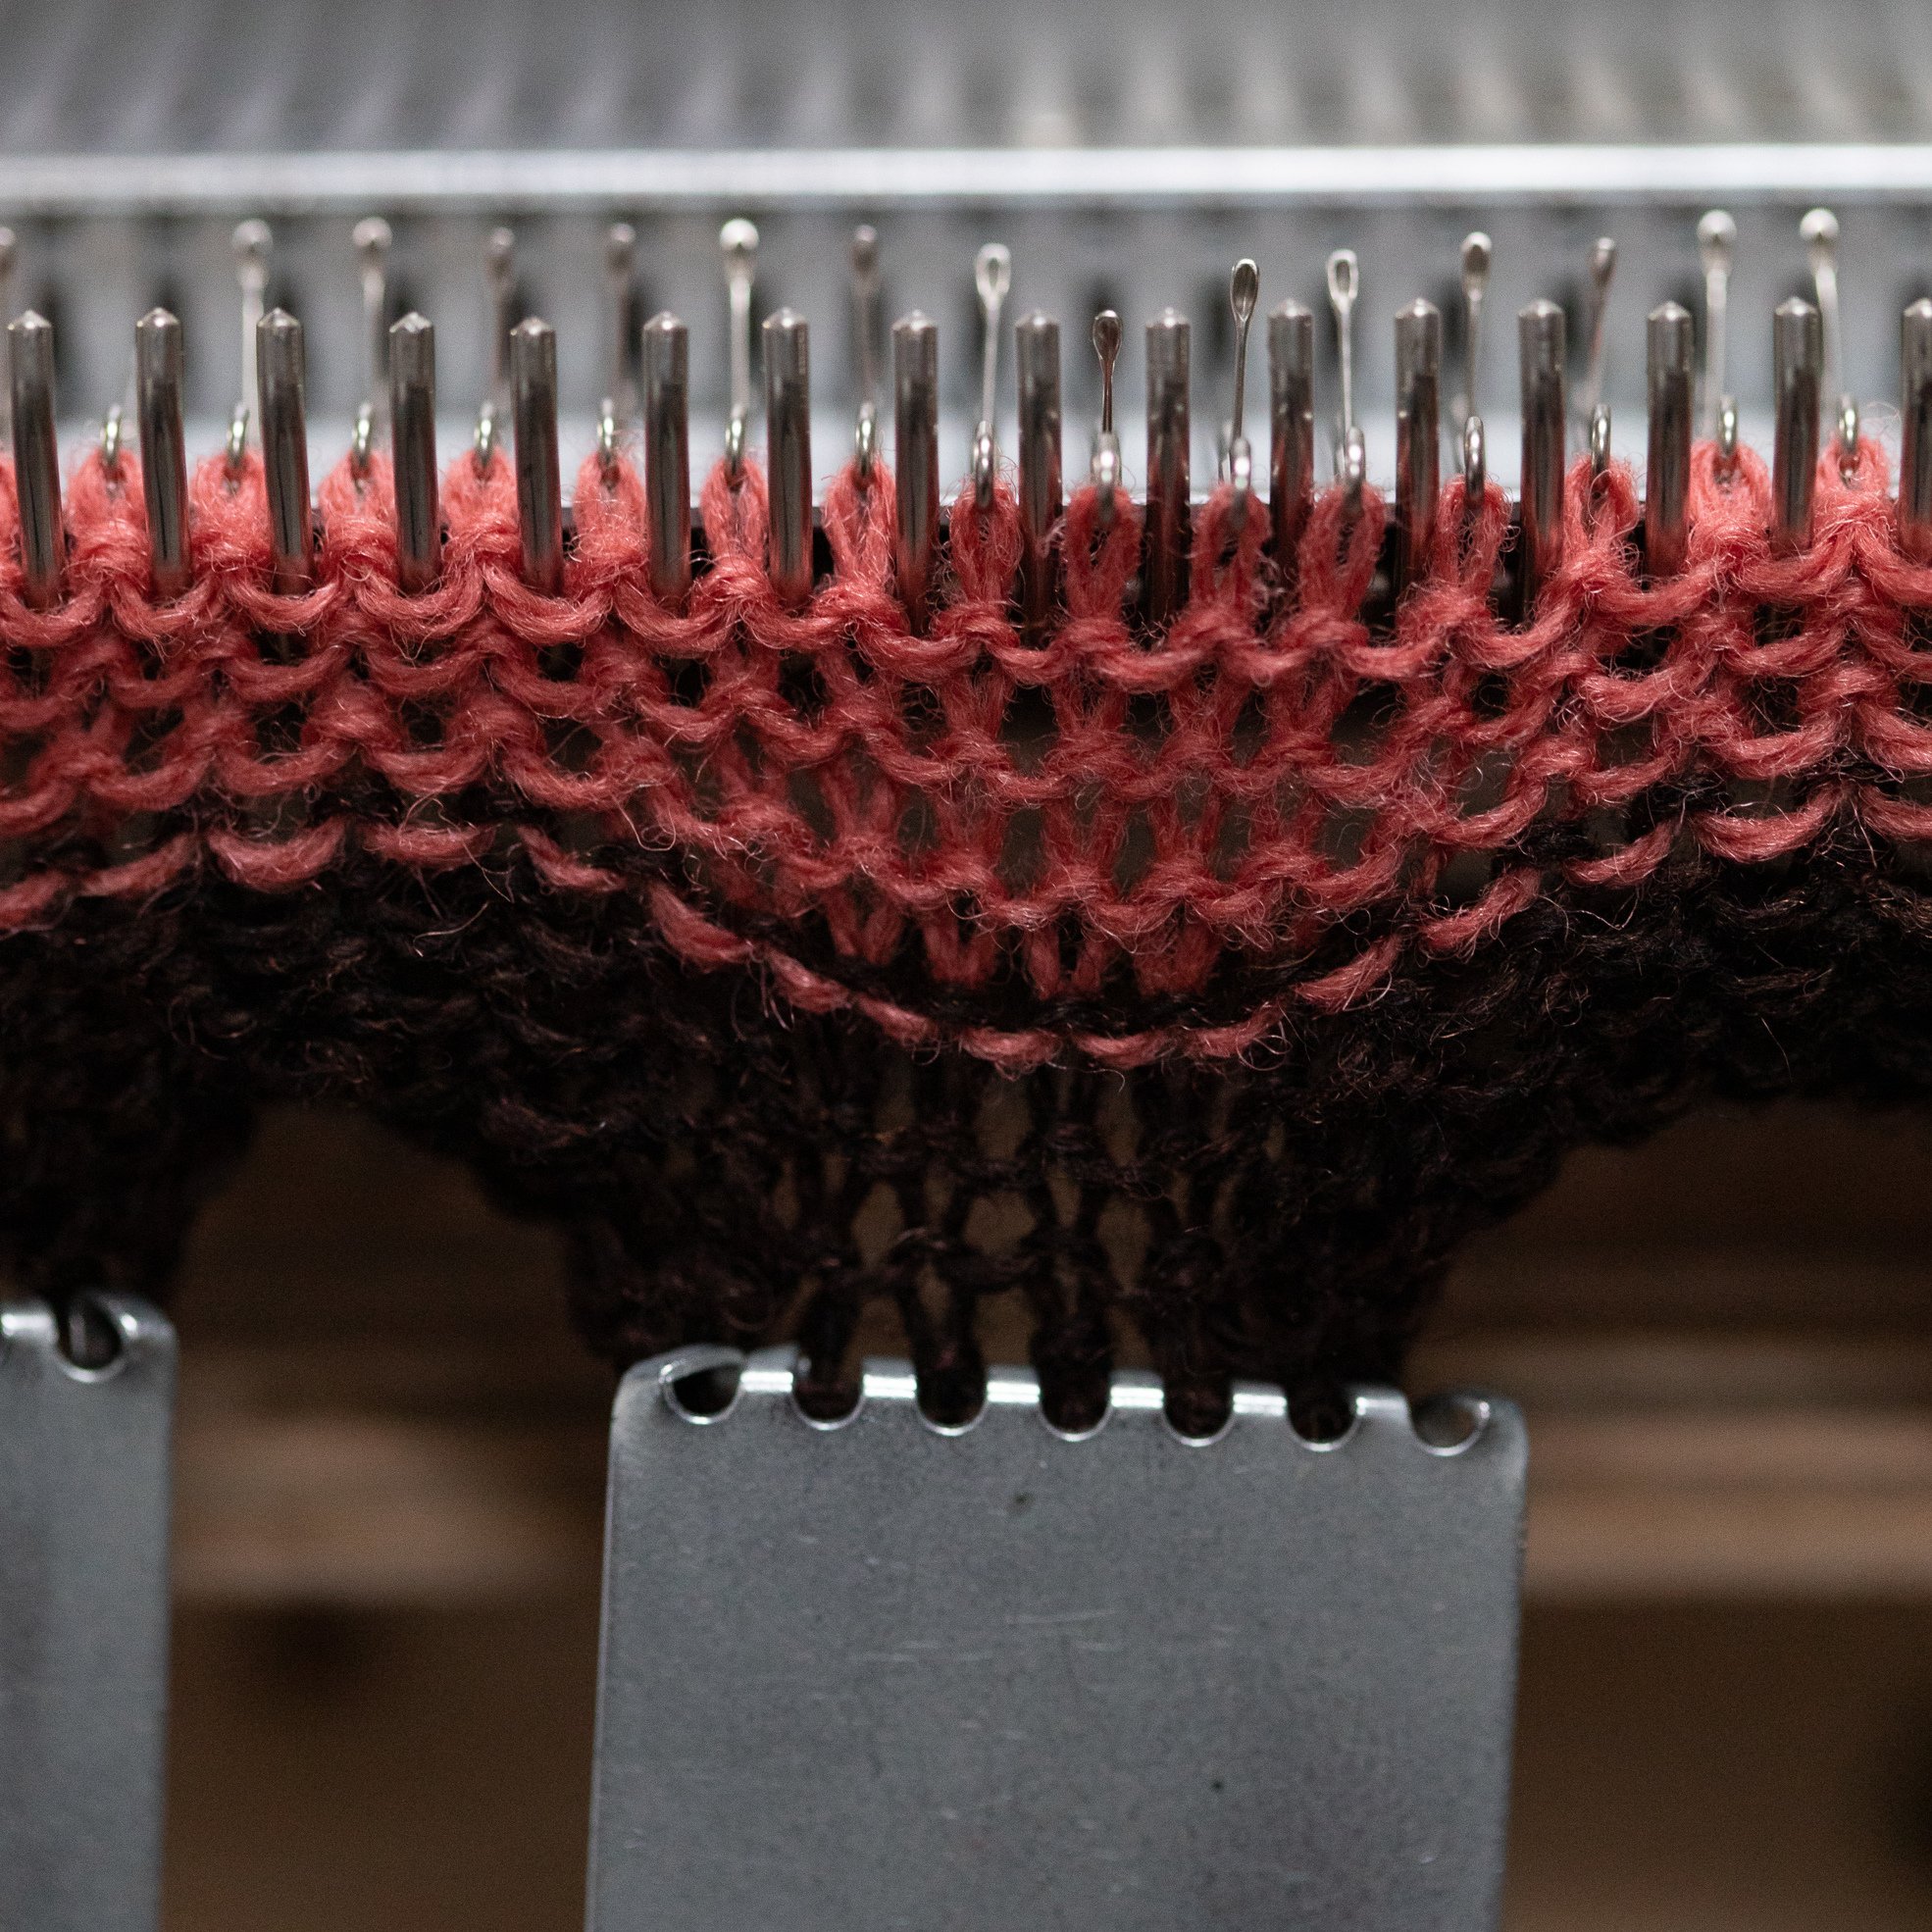 Knit Sweater Using Sentro Knitting Machine : r/knitting